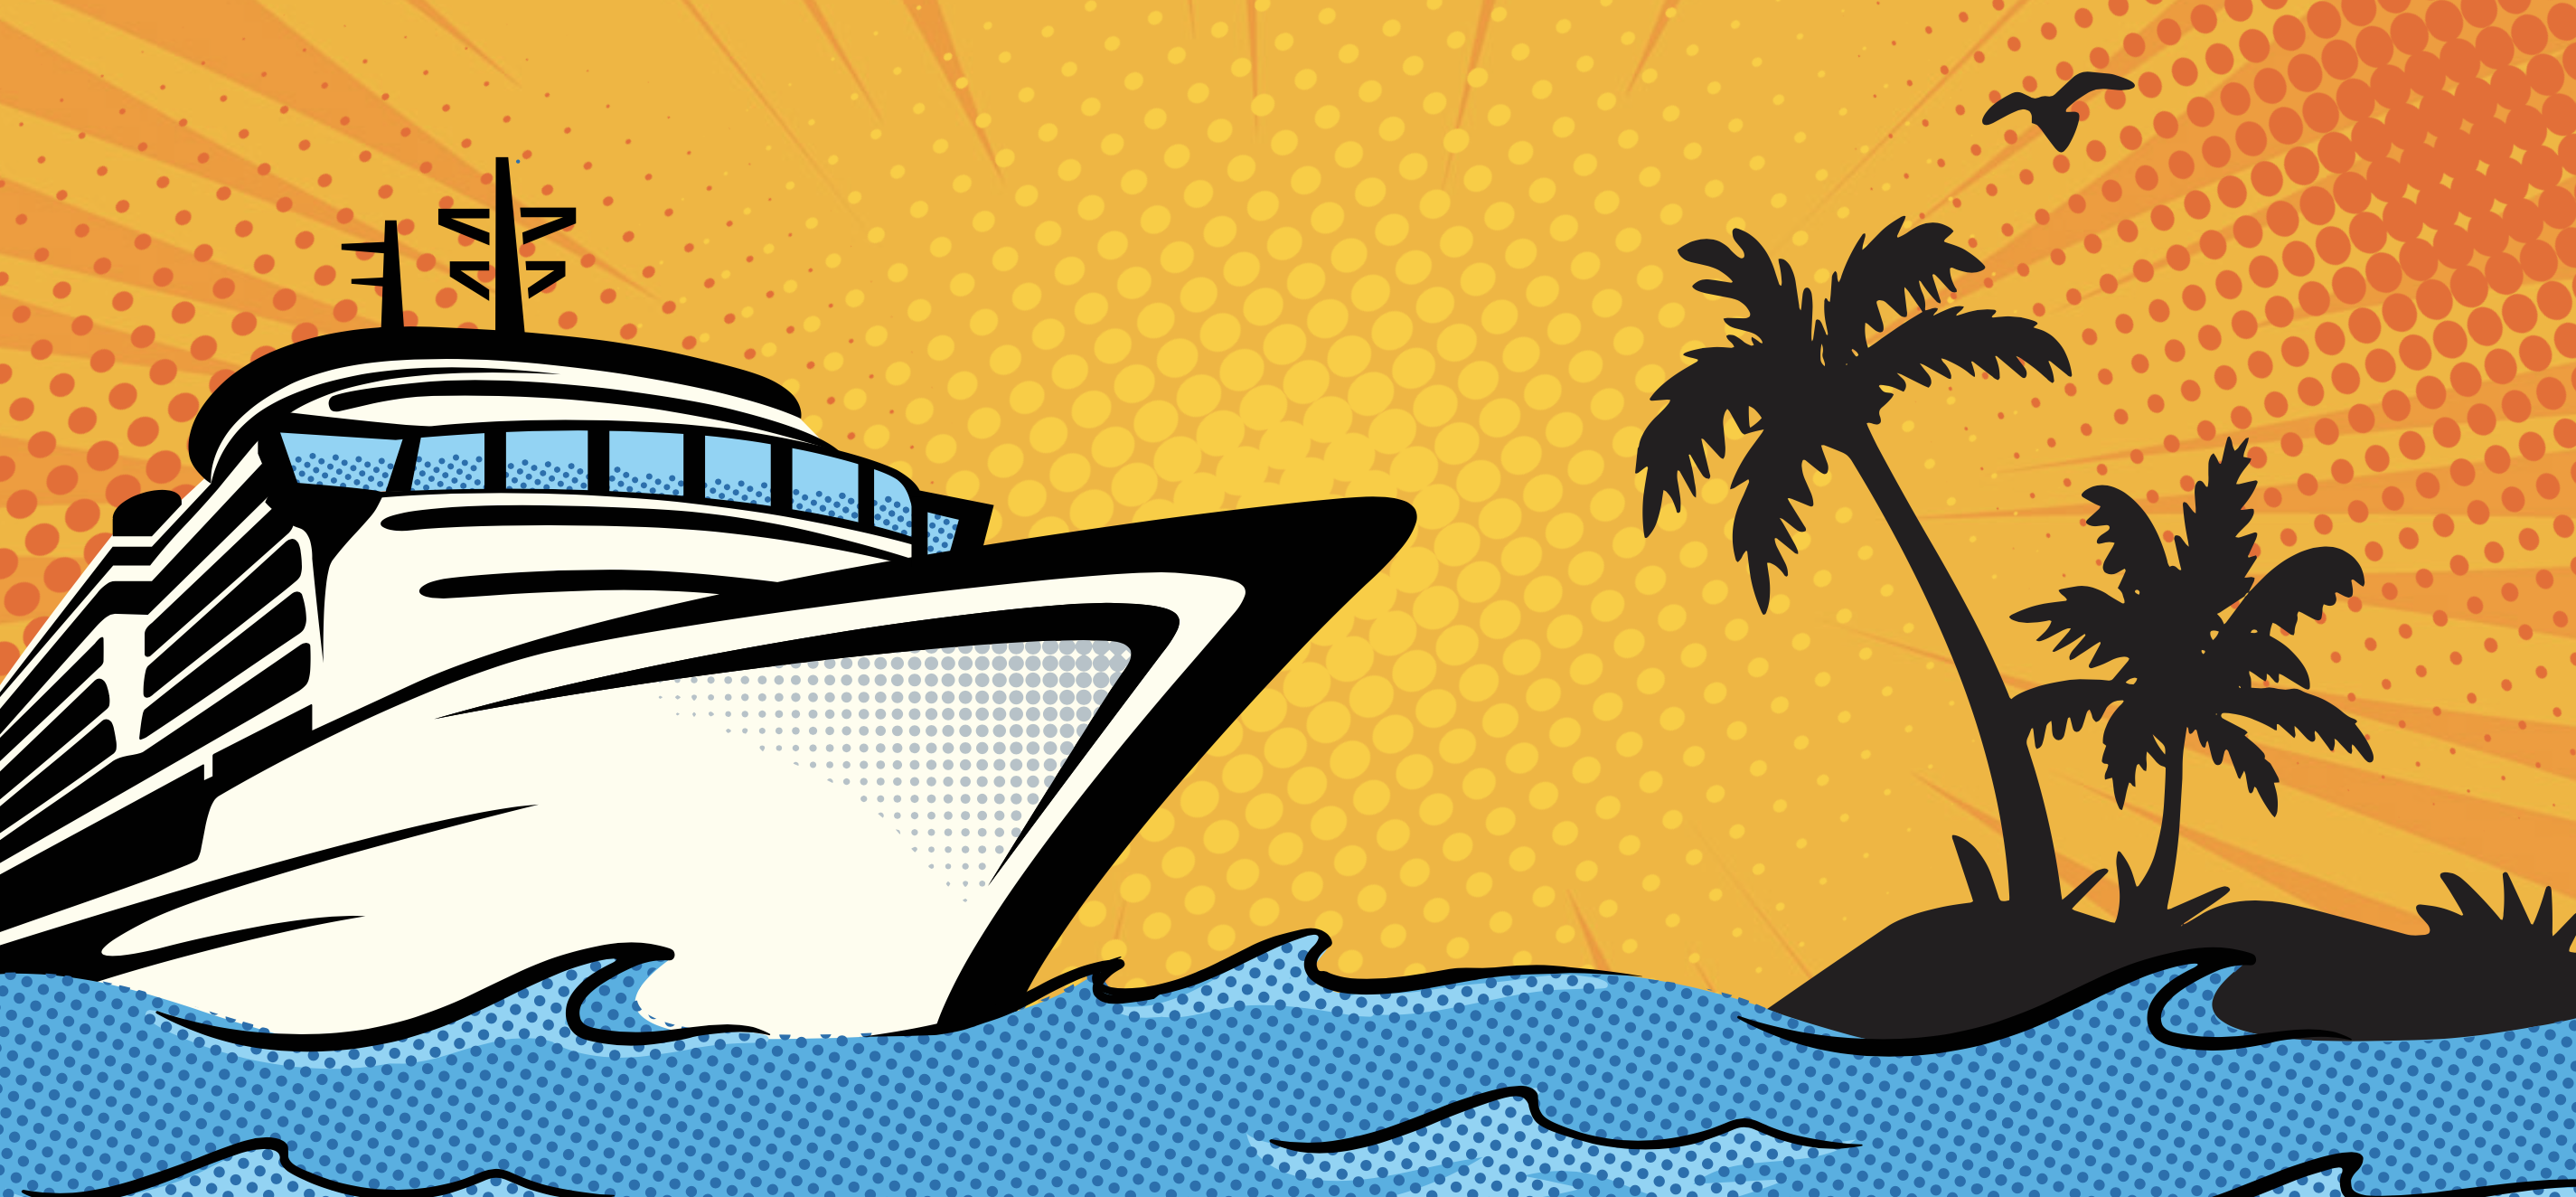 Comic-Con: The Cruise Sets Sail To Unite Fans For An Unprecedented Fan Adventure